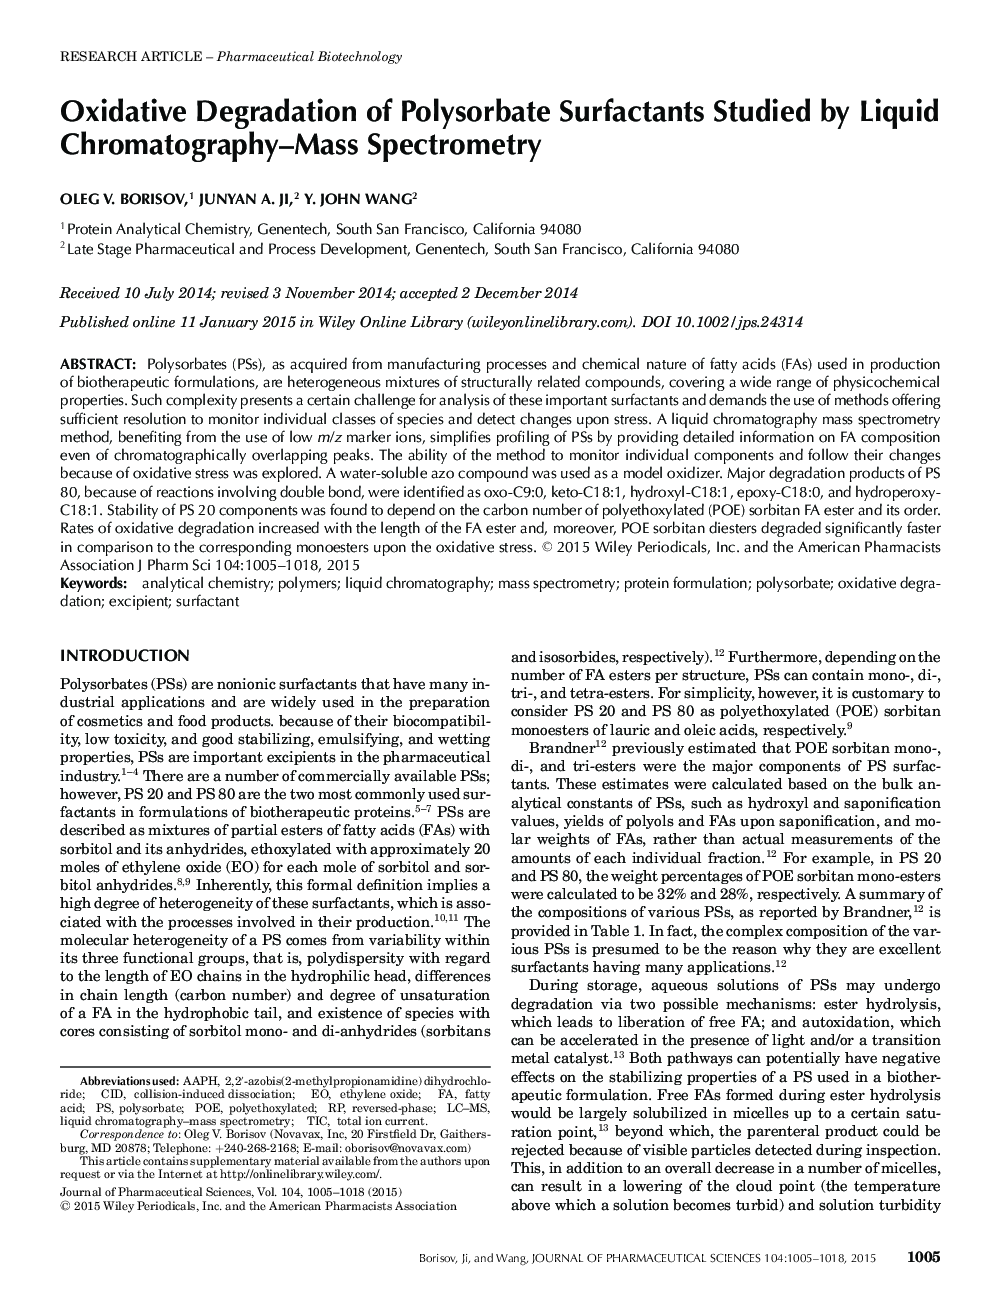 Oxidative Degradation of Polysorbate Surfactants Studied by Liquid Chromatography-Mass Spectrometry